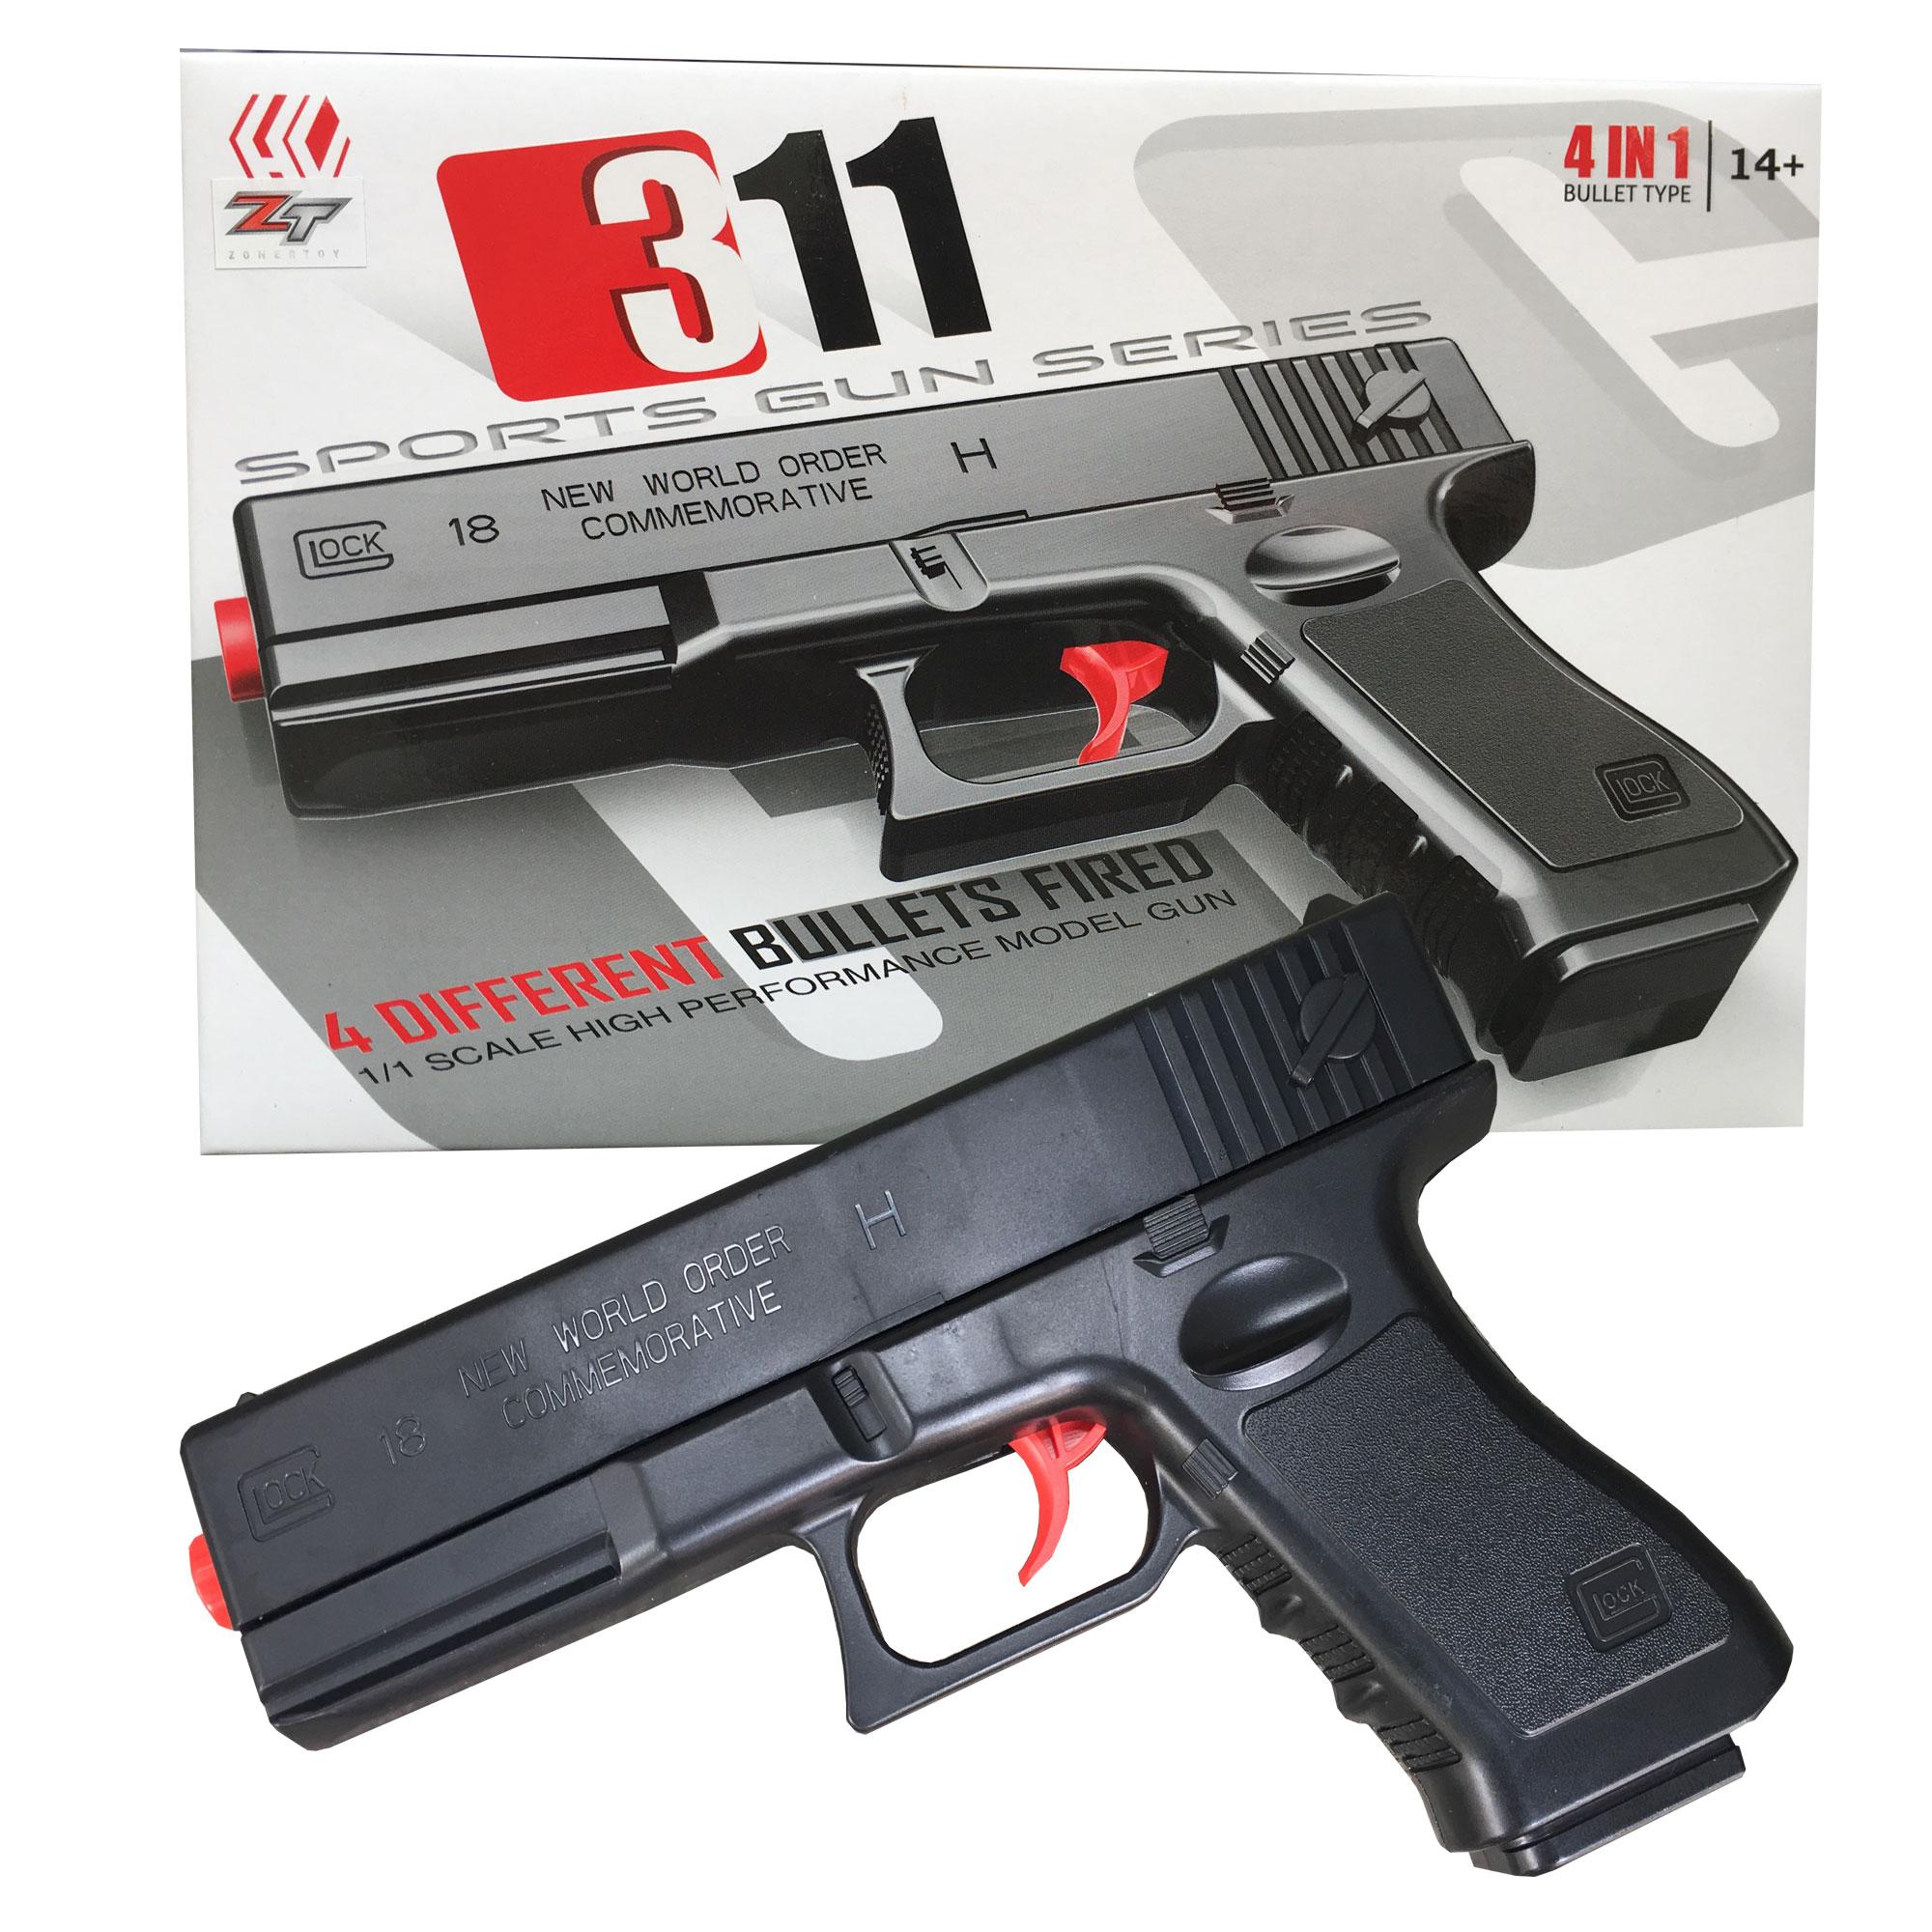 KhoaOat Toys ของเล่น ปืนสั้น ปืนอัดลม 4in1 ( 311 )